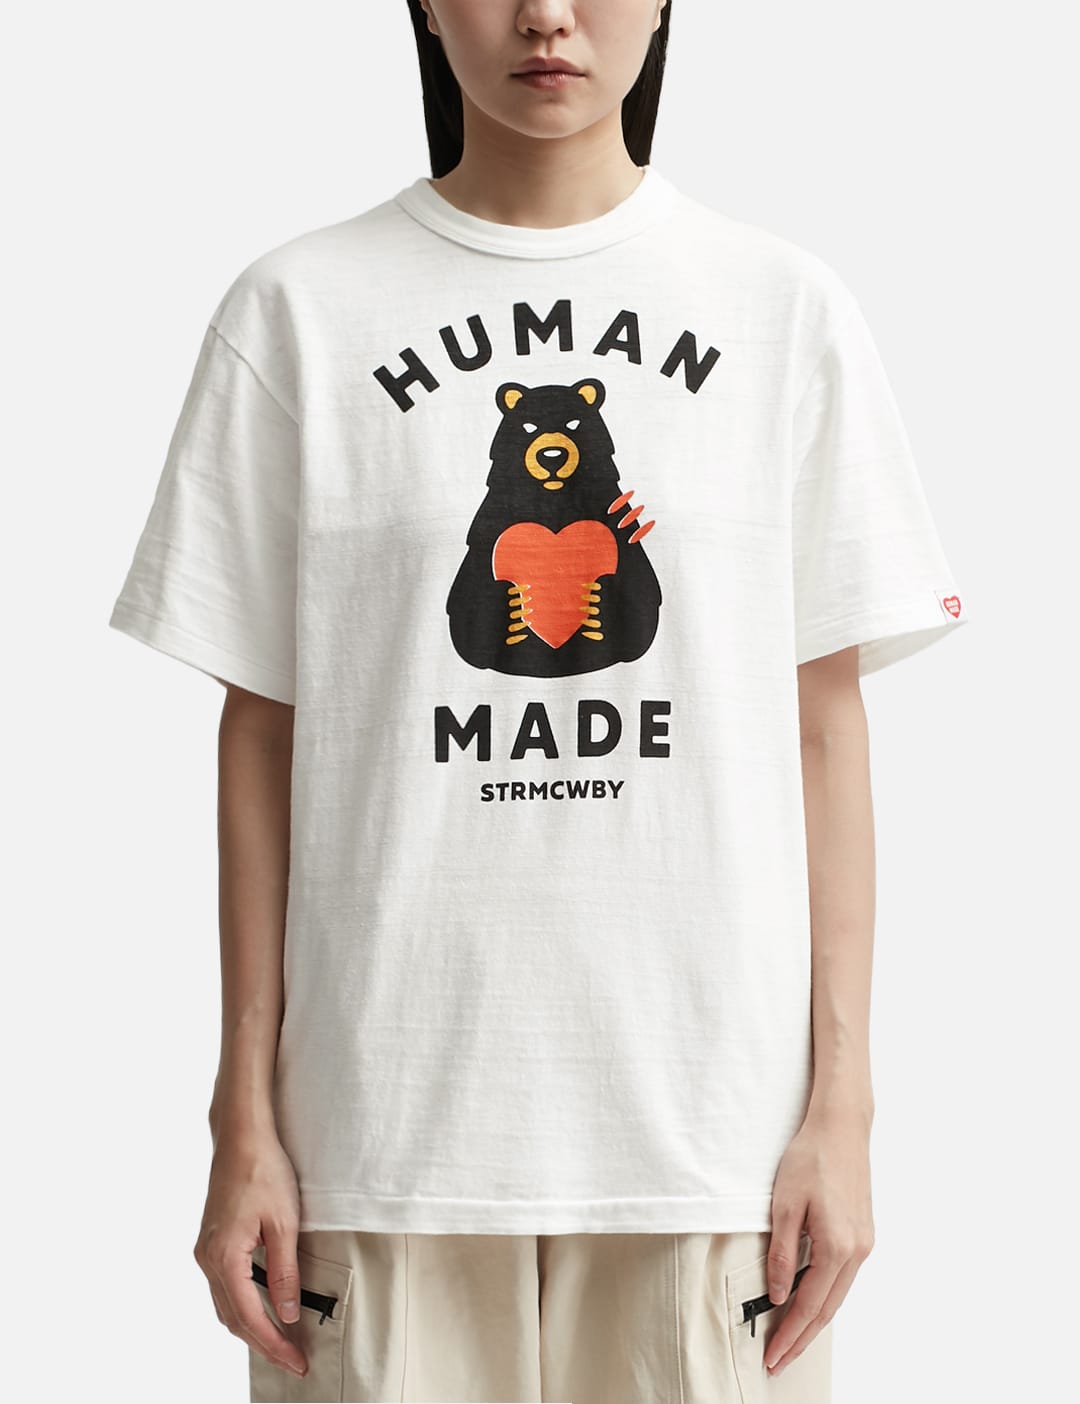 HUMAN MADE Graphic T-Shirtメンズ